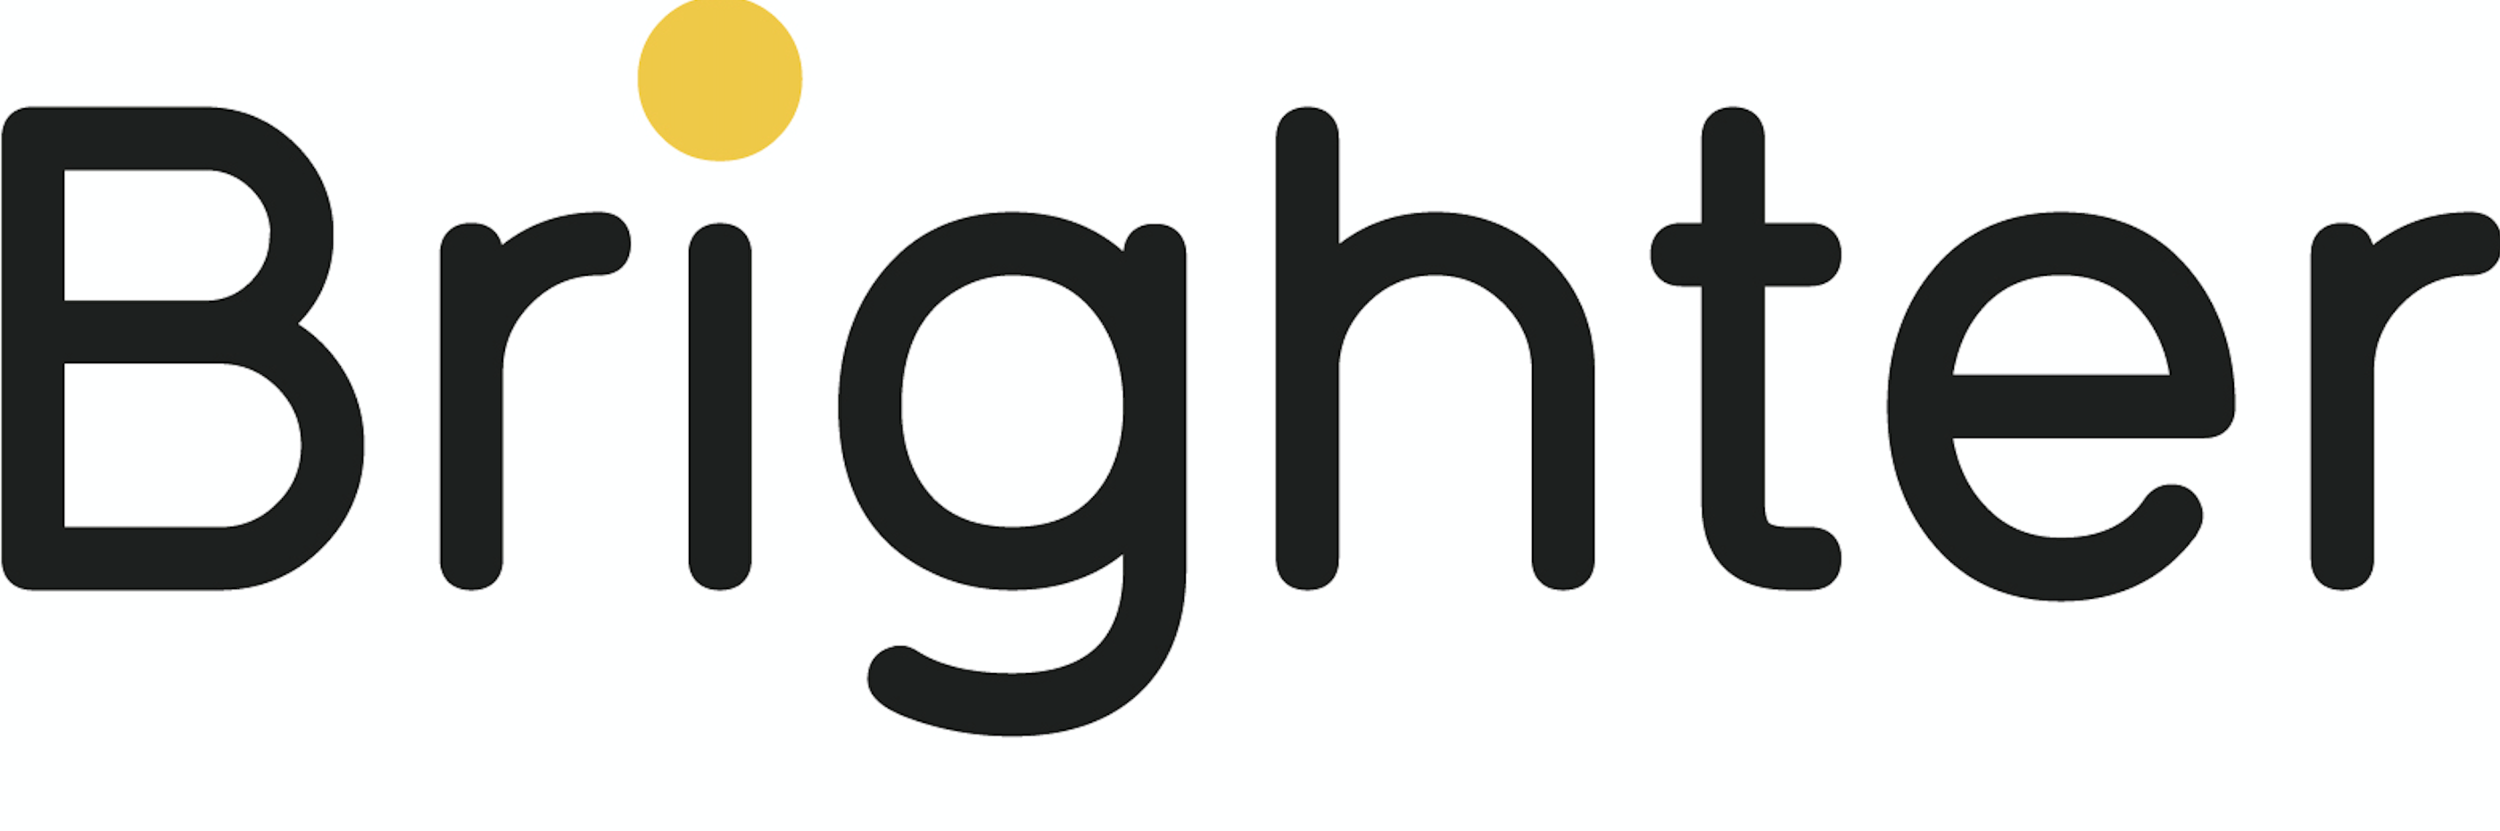 Брайт логотип. Bright photo логотип. Brighter [Brighter] Brighter. OIS Bright логотип. Brightness перевод на русский